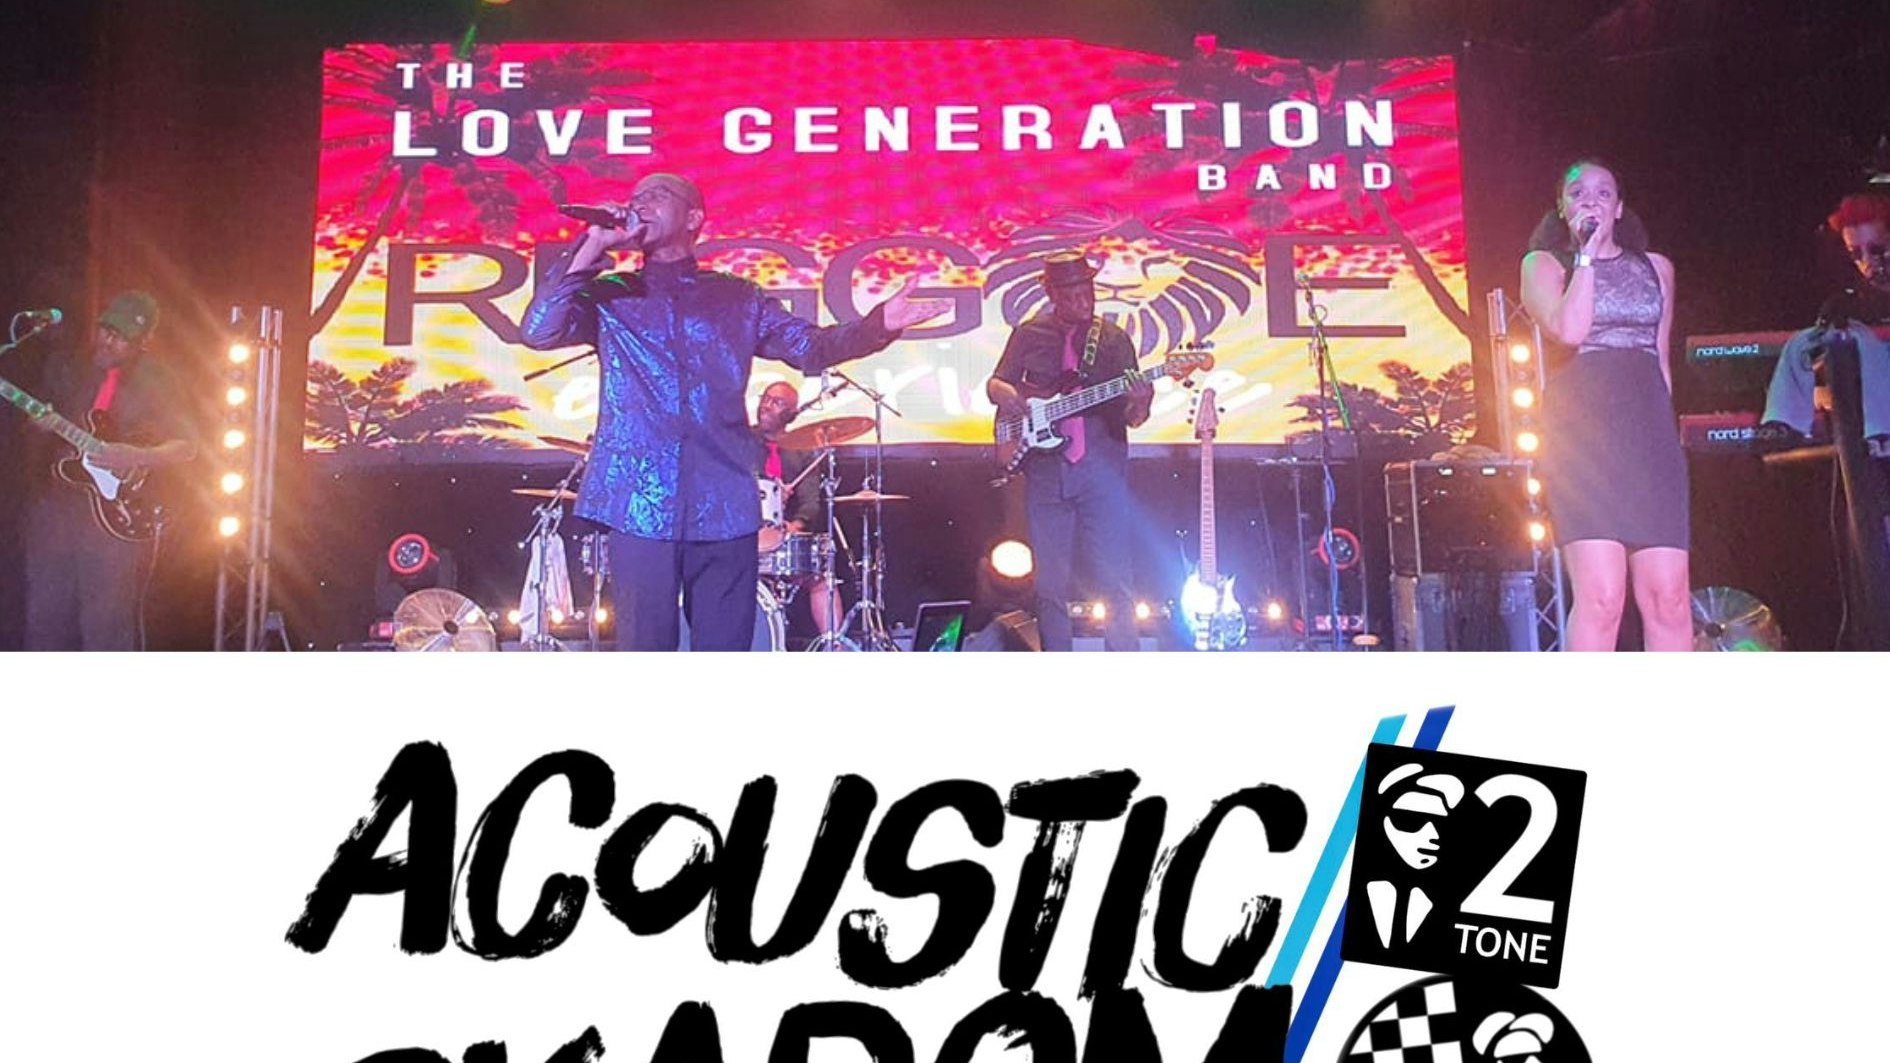 Ska & Reggae Night –  Acoustic Skadam & Love Generation